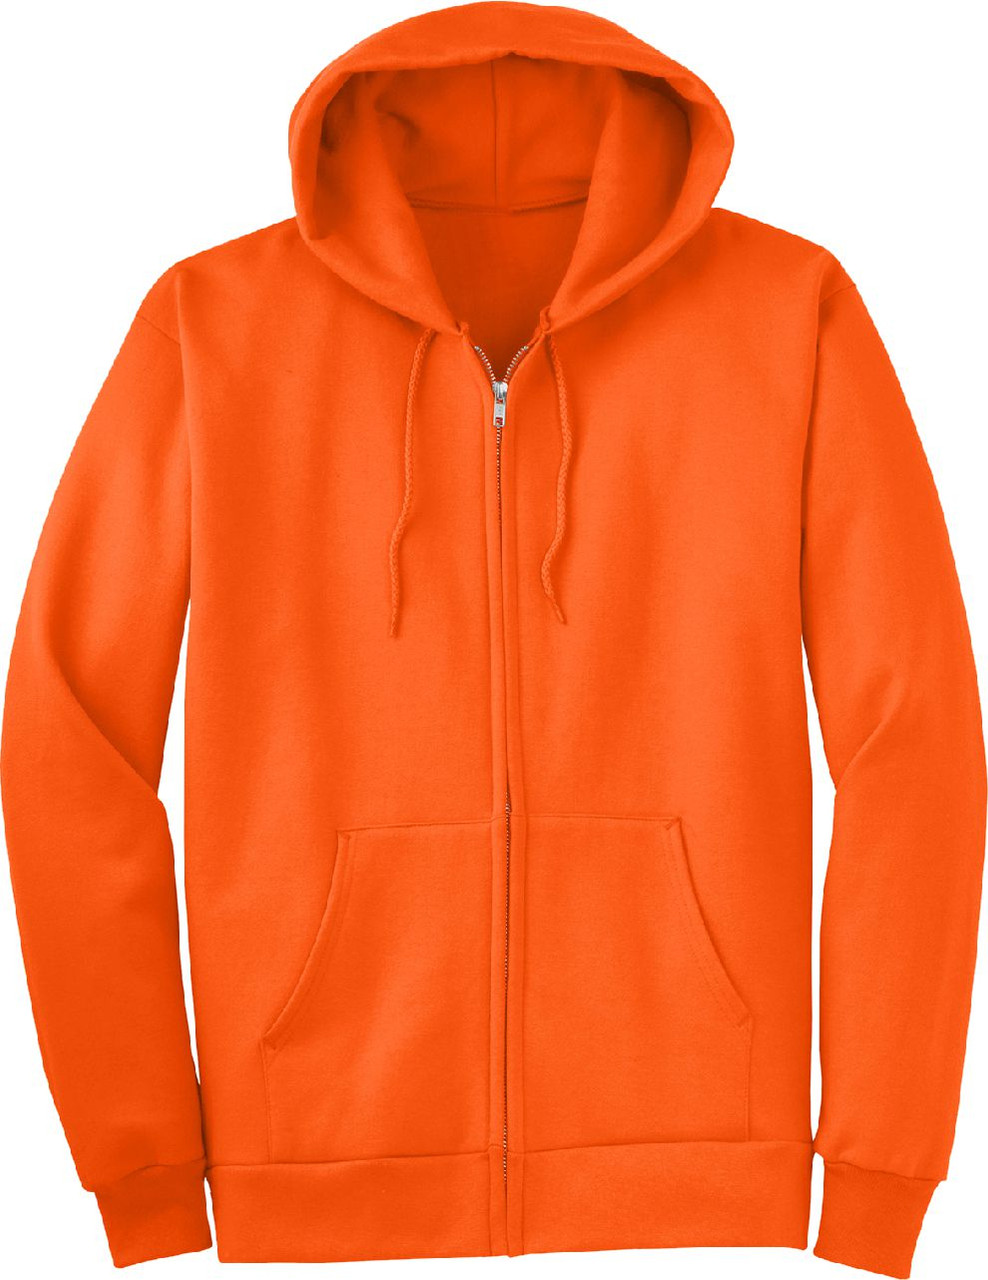 Safety Orange Hooded Sweatshirt.  Ask about custom printing on our Hi Vis Hoodies. | Safety Orange Zipper Hoodie | Hi Vis Orange Hoodie with Zipper